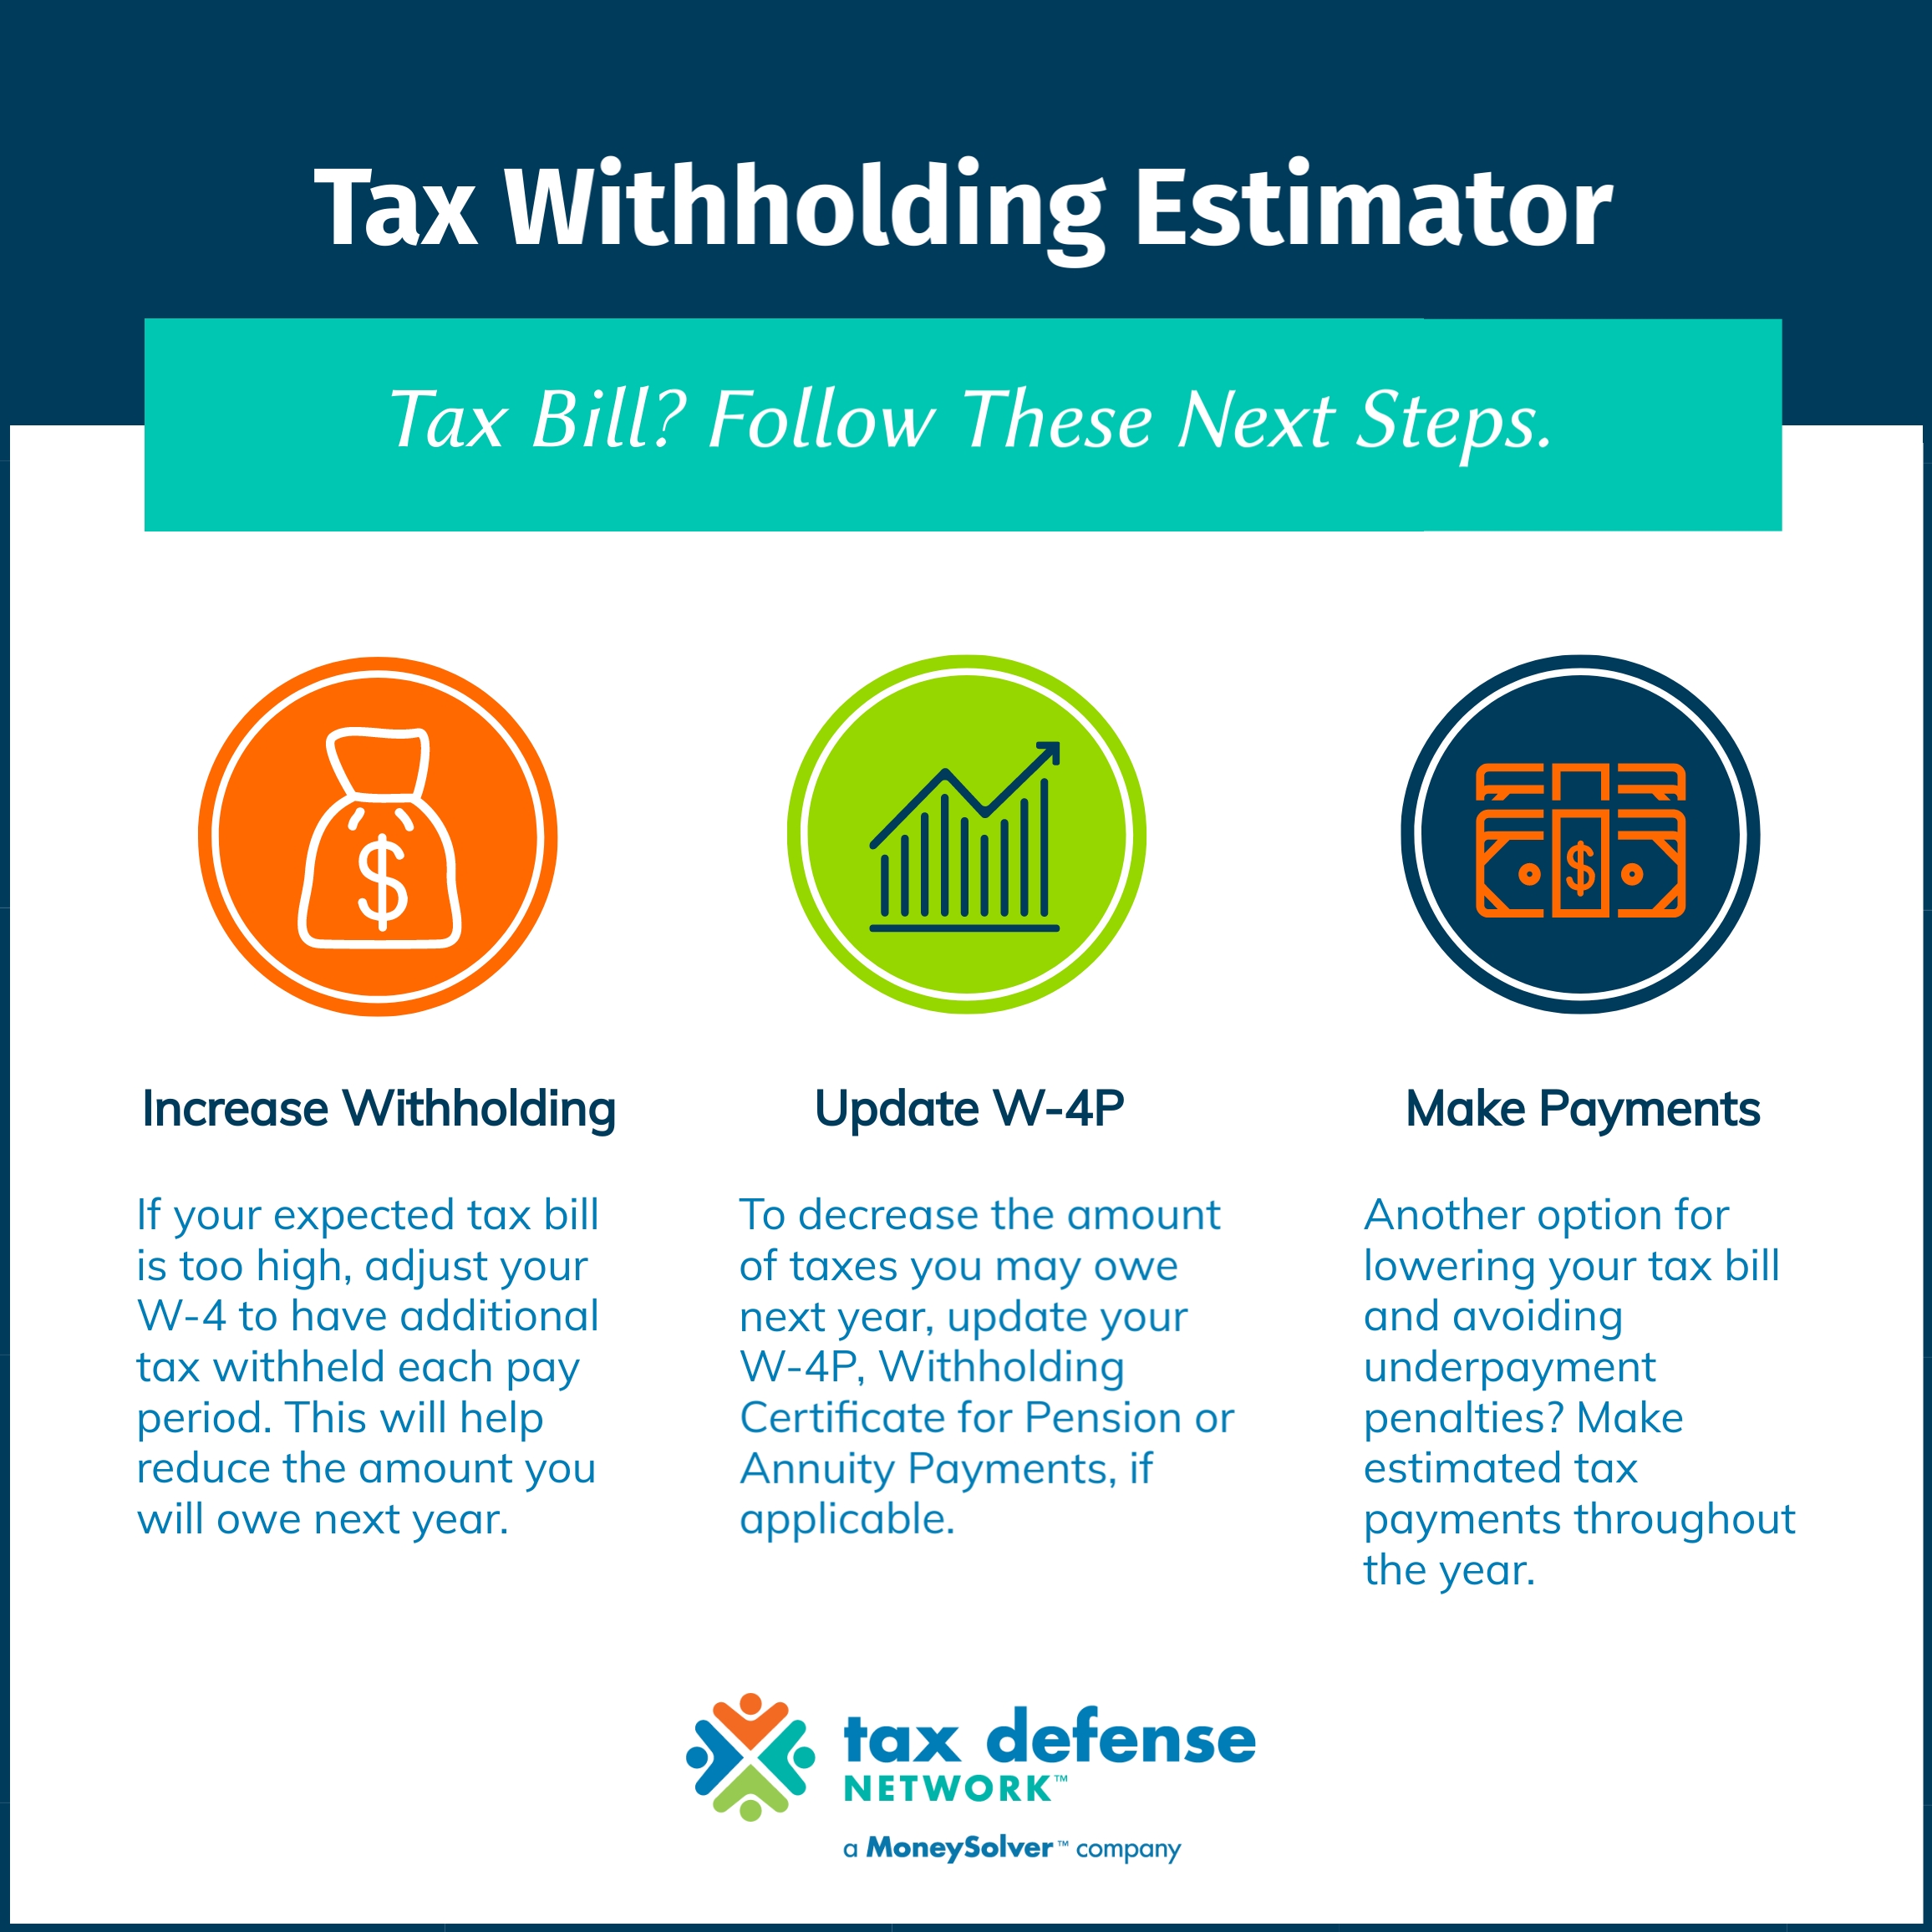 IRS tax withholding estimator